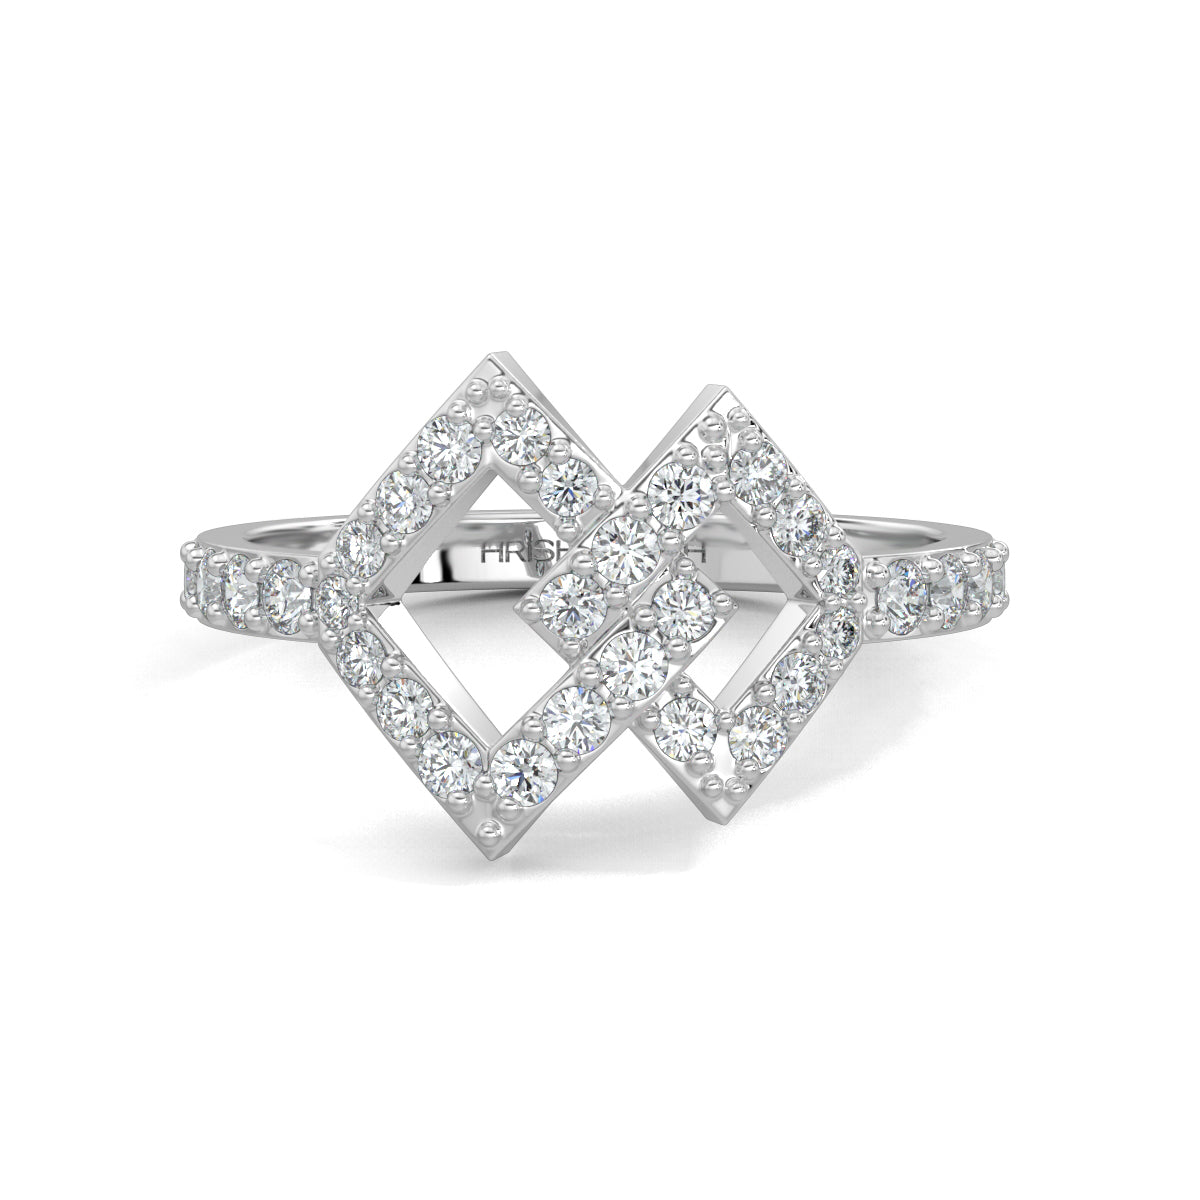 White Gold, Diamond Ring, Natural diamond ring, Lab-grown diamond ring, intertwined diamond design, round diamond accents, unity symbol ring, elegant diamond band.